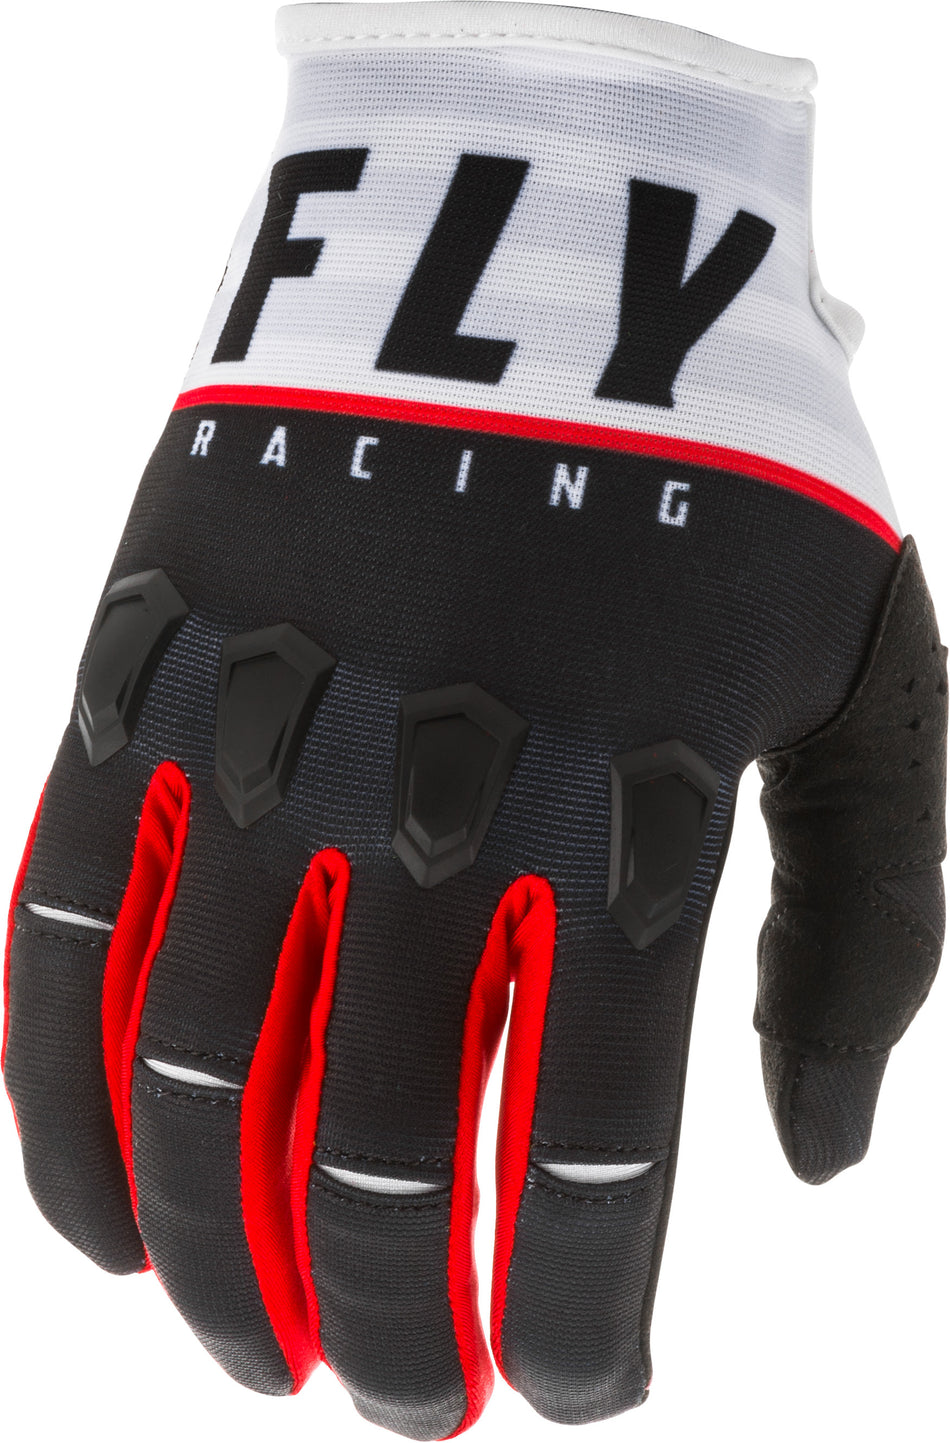 FLY RACING Kinetic K120 Gloves Black/White/Red Sz 06 373-41306